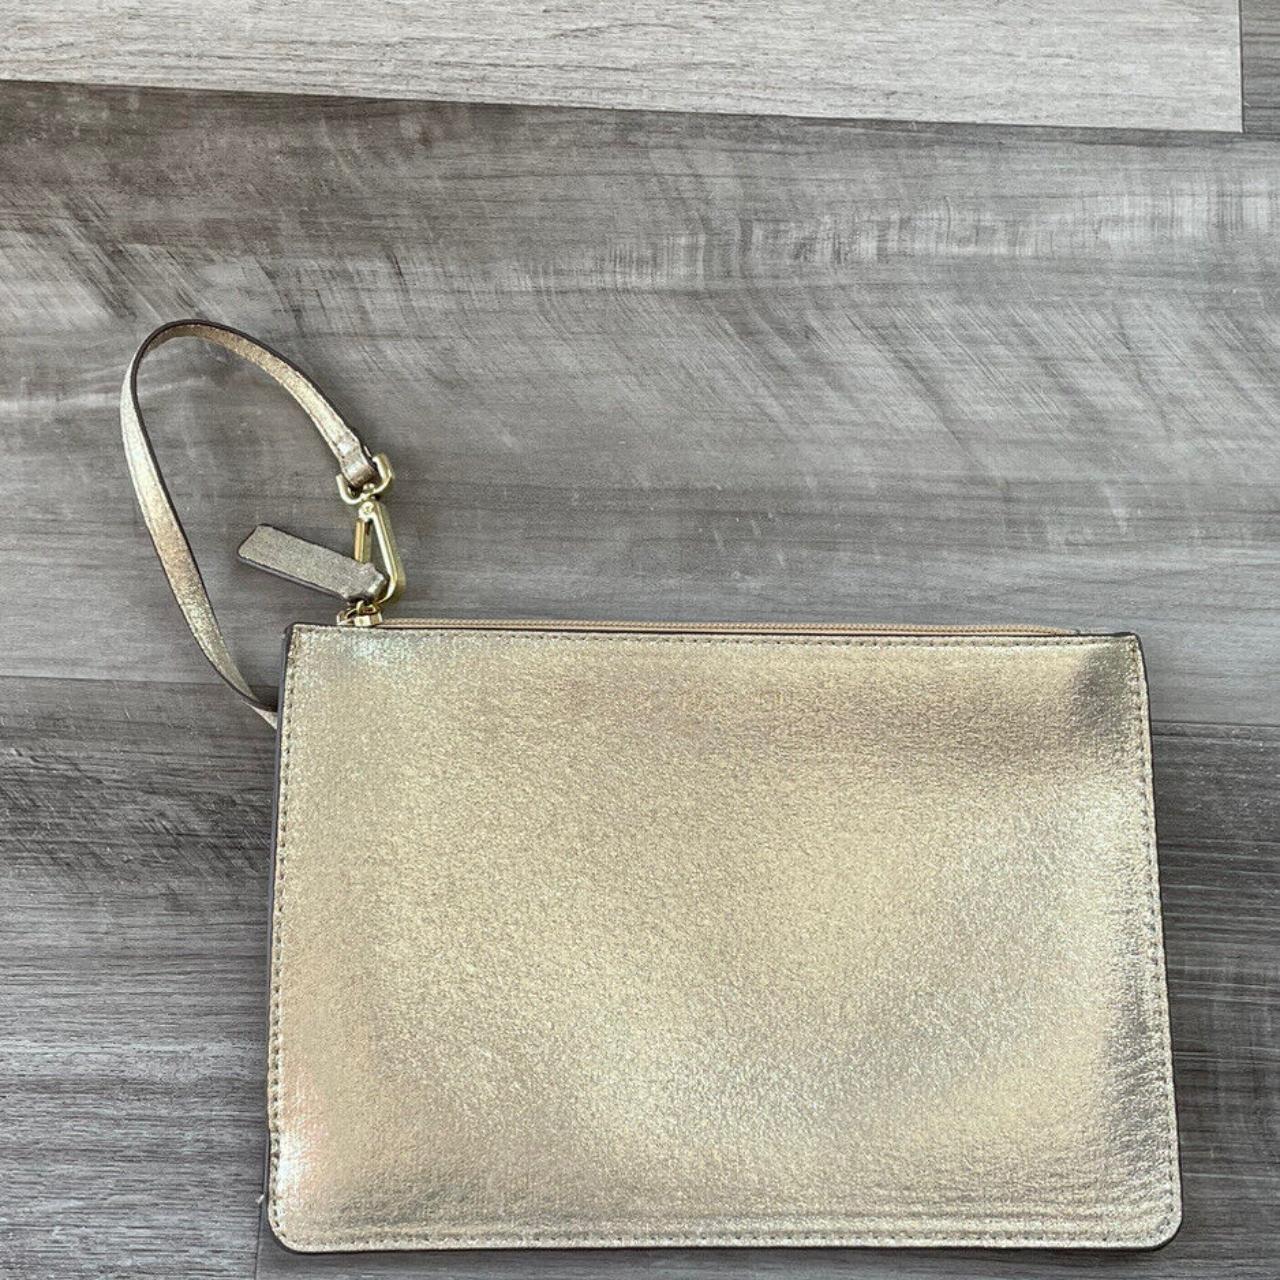 Calvin Klein Hailey Convertible Crossbody Bag Purse Clutch, White Green |  Accessorising - Brand Name / Designer Handbags For Carry & Wear... Share If  You Care! | Convertible crossbody bag, Purses and bags, Bags